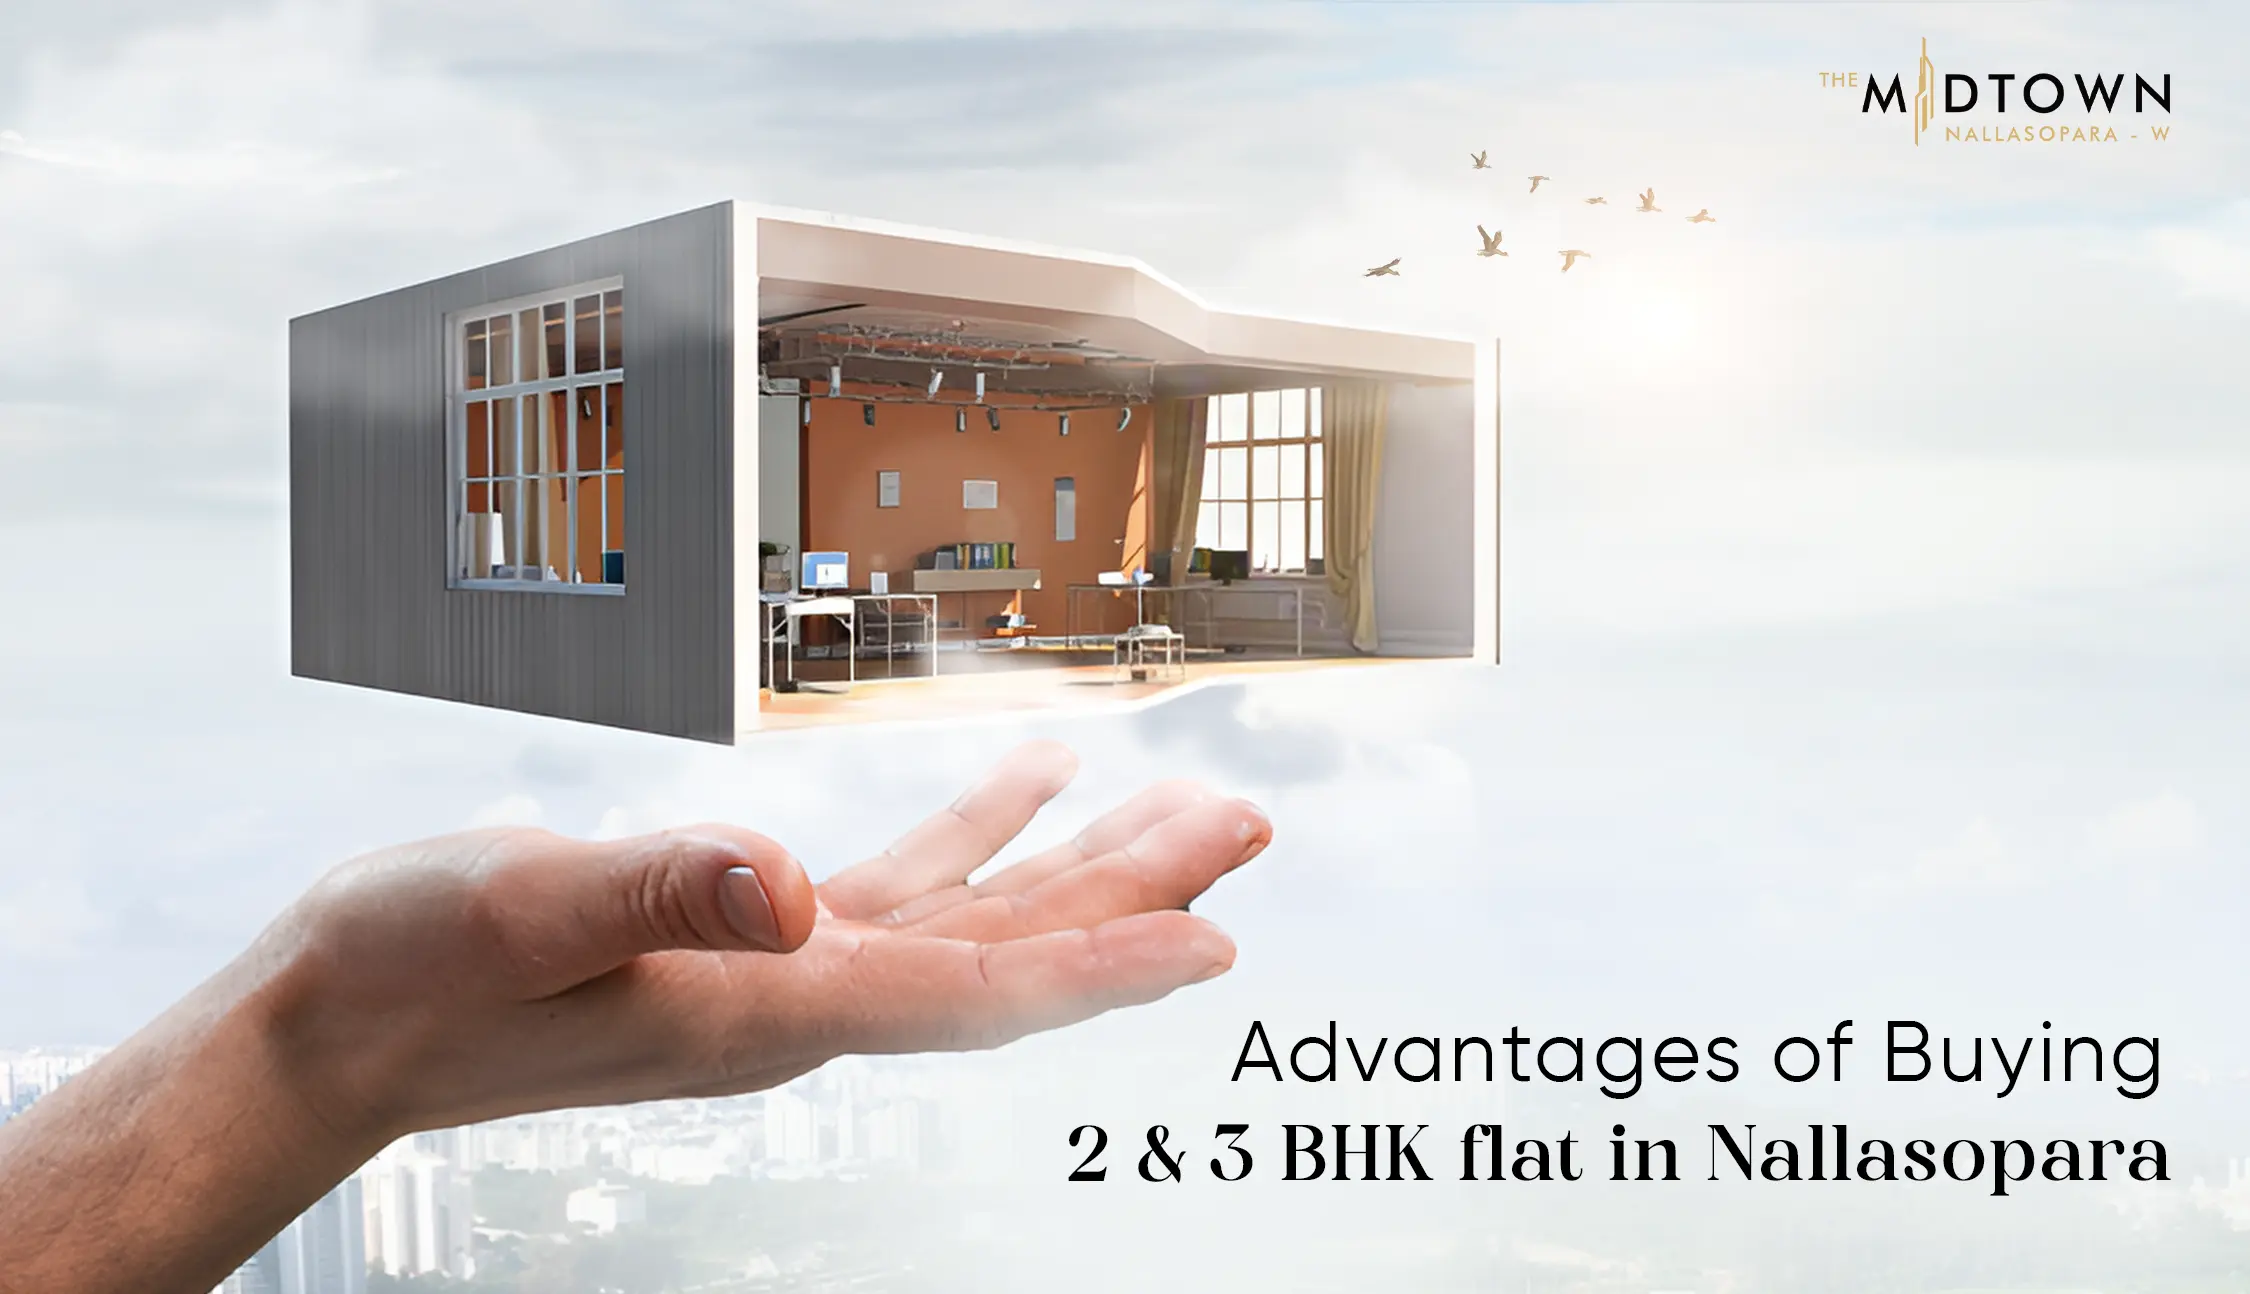 Advantages of Buying 2 & 3 BHK flat in Nallasopara